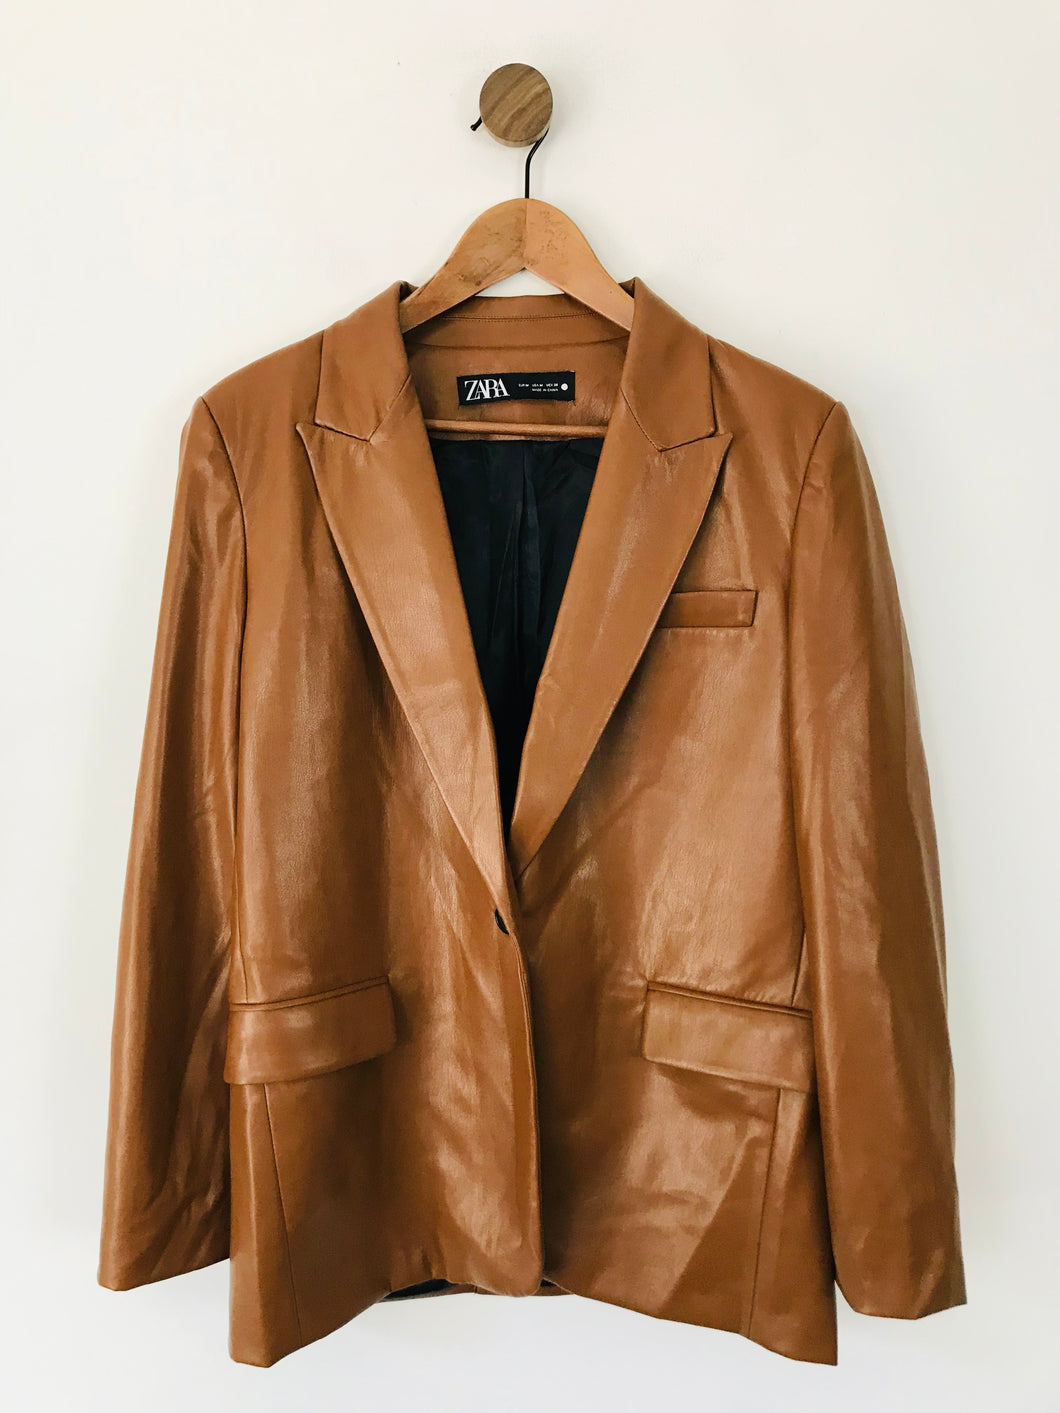 Zara Women's Faux Leather Blazer Jacket | M UK10-12 | Brown